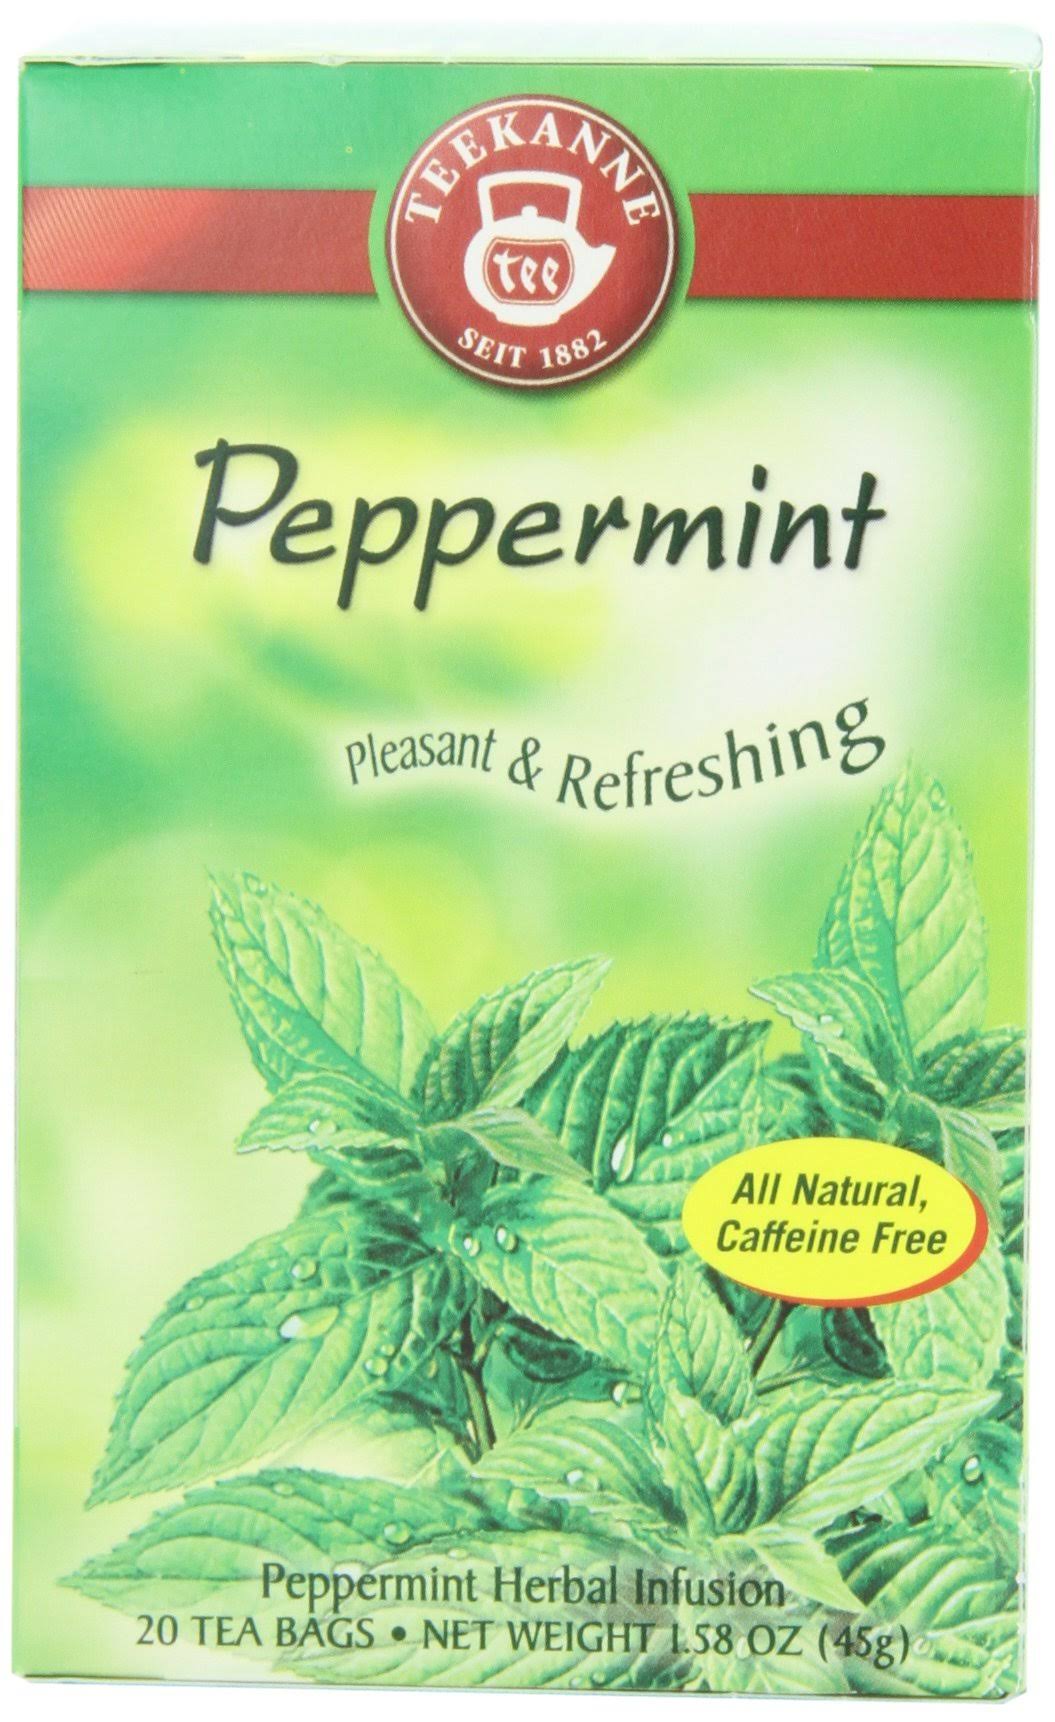 Teekanne Tea - Peppermint, 20 Tea Bags